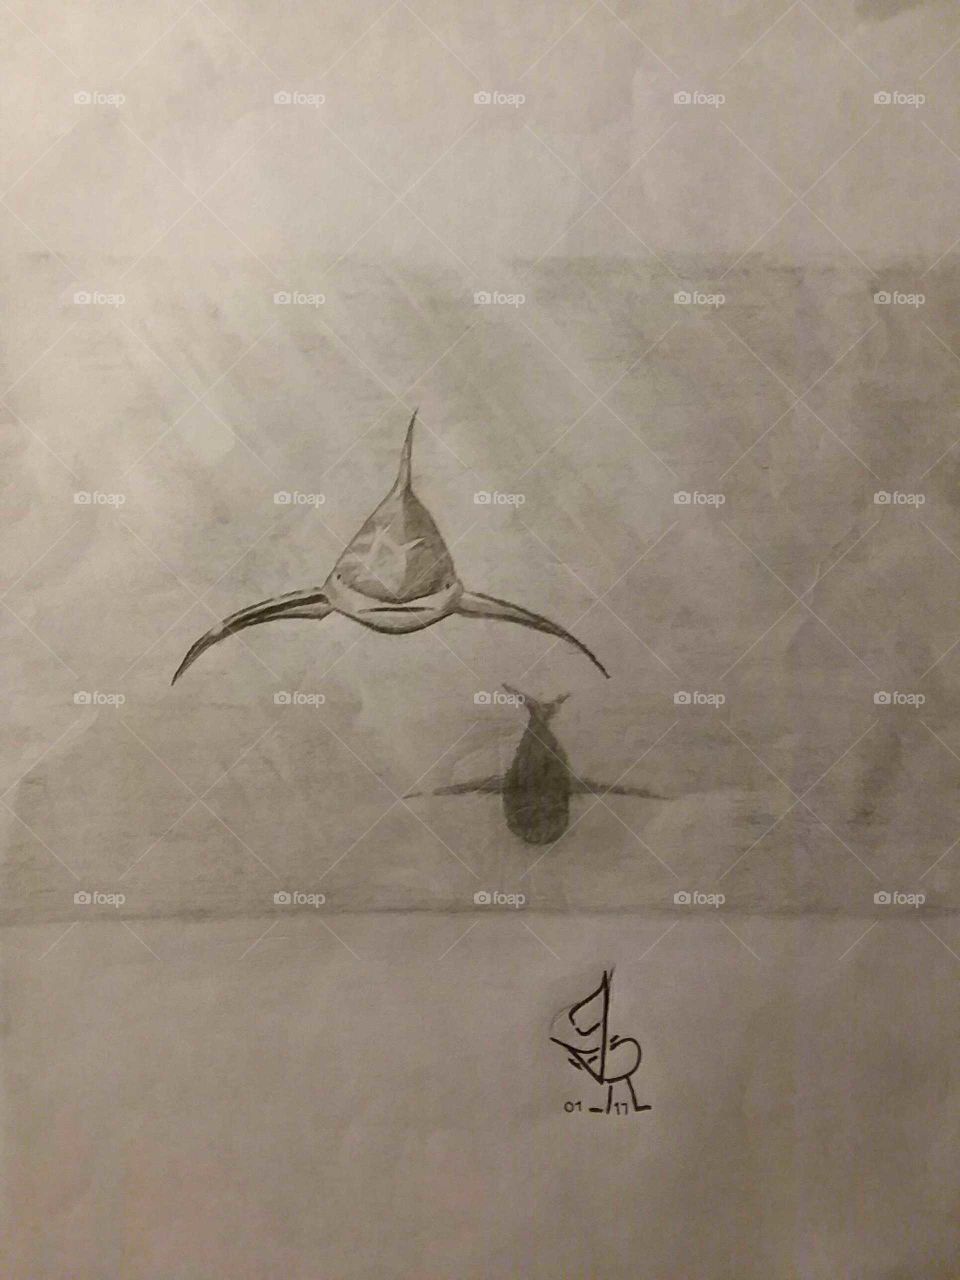 My Pencil Sketches: Shark